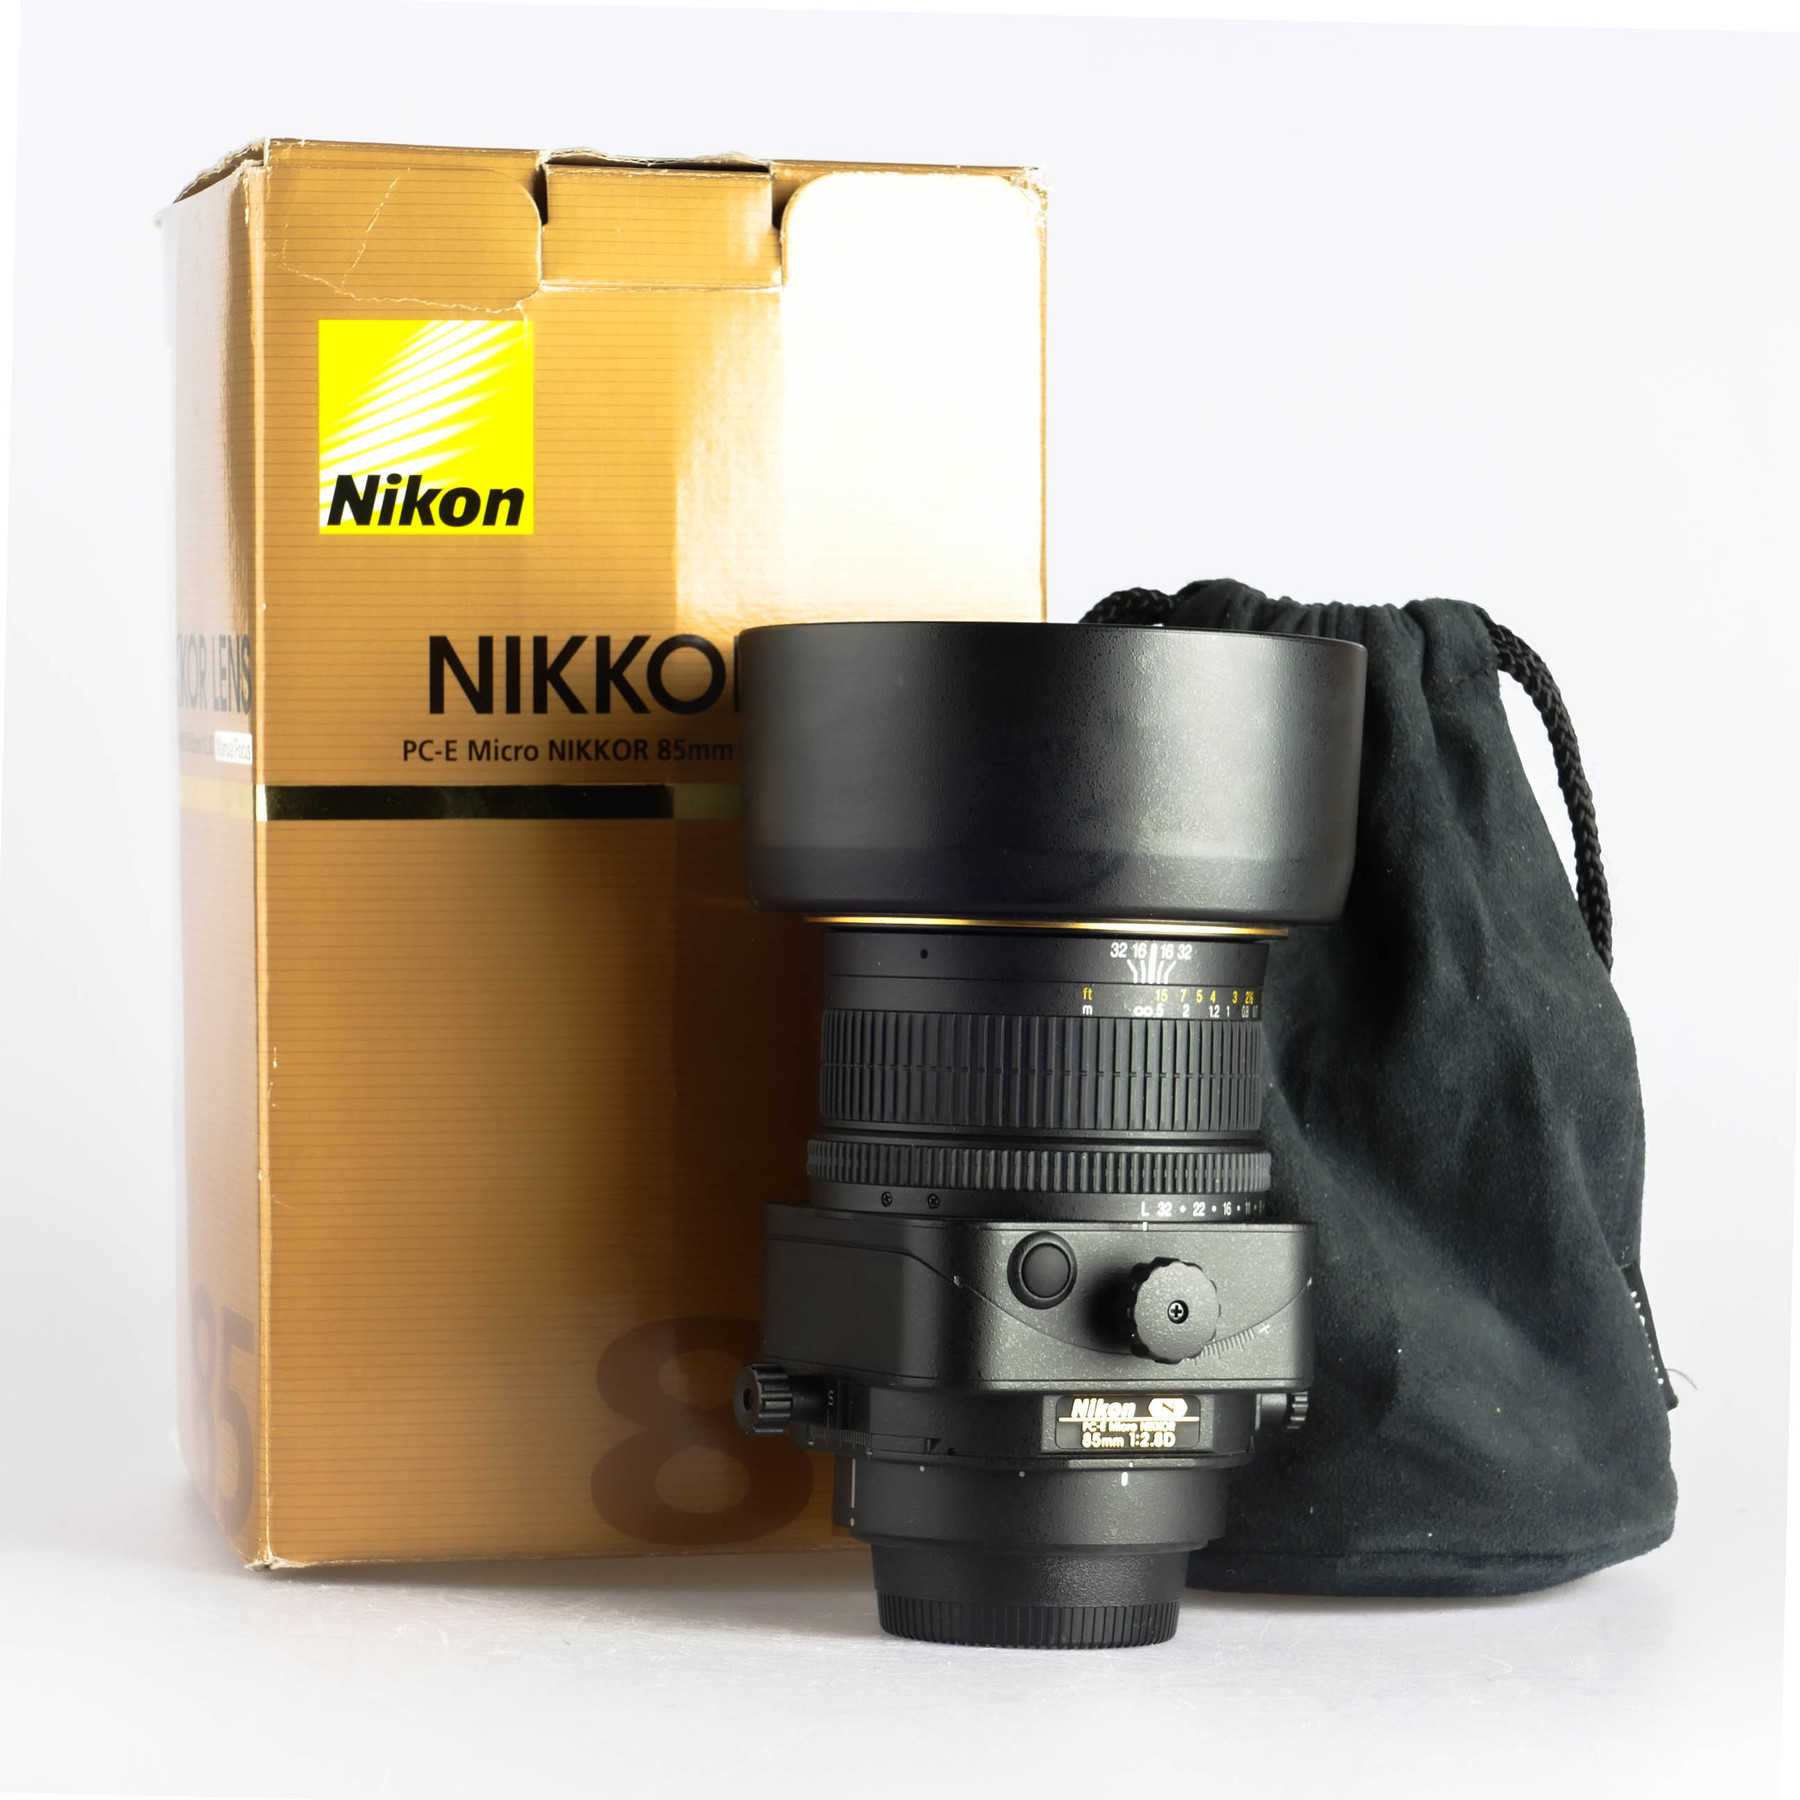 Nikon 85mm f/2.8 D PC-Micro-Nikkor